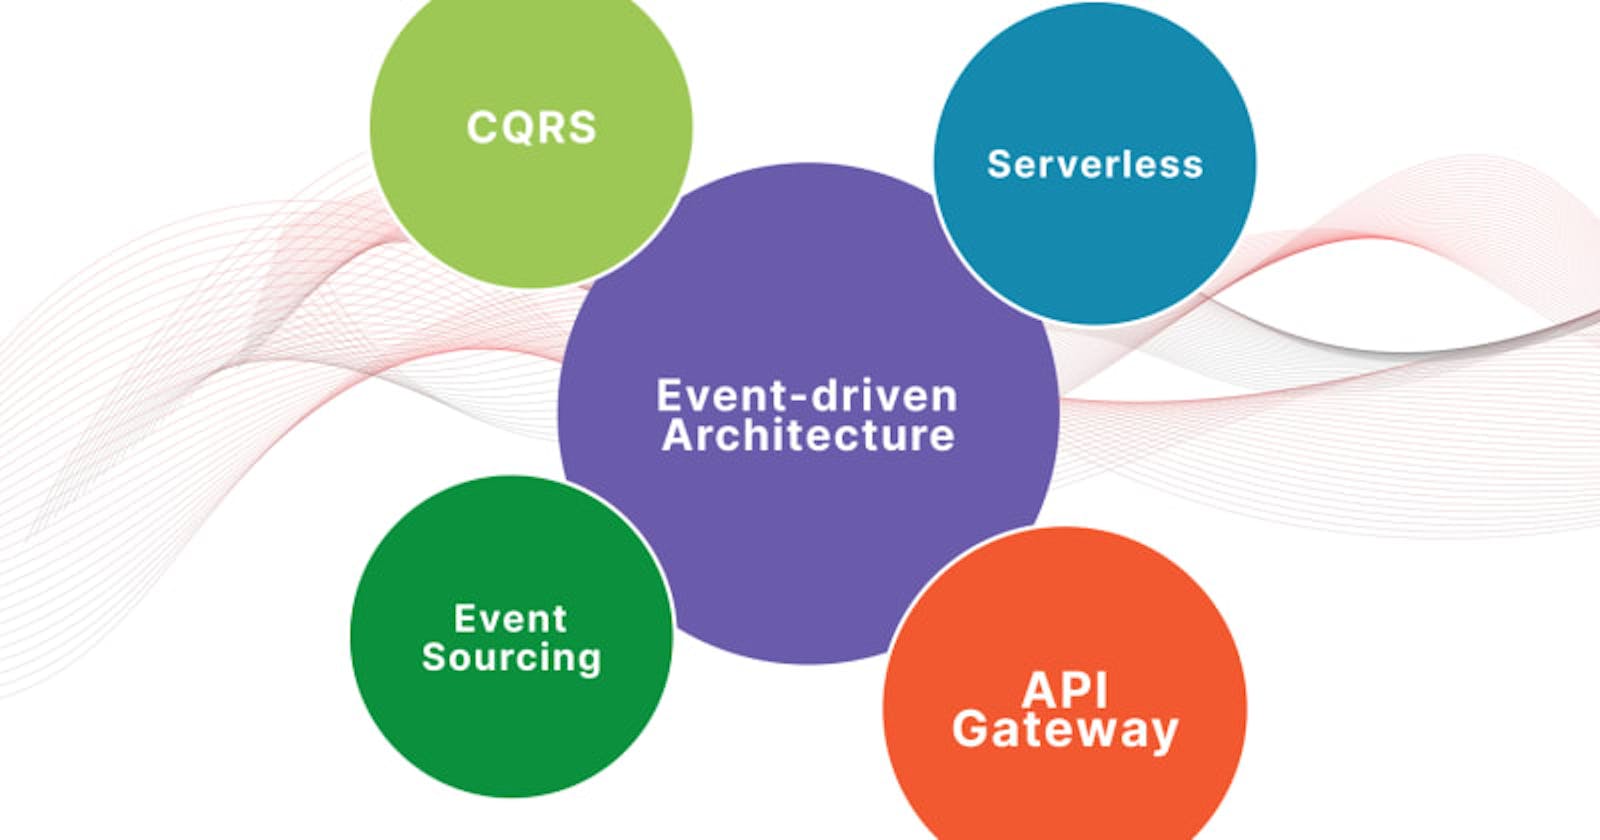 Building event-driven API services using CQRS, API Gateway and Serverless